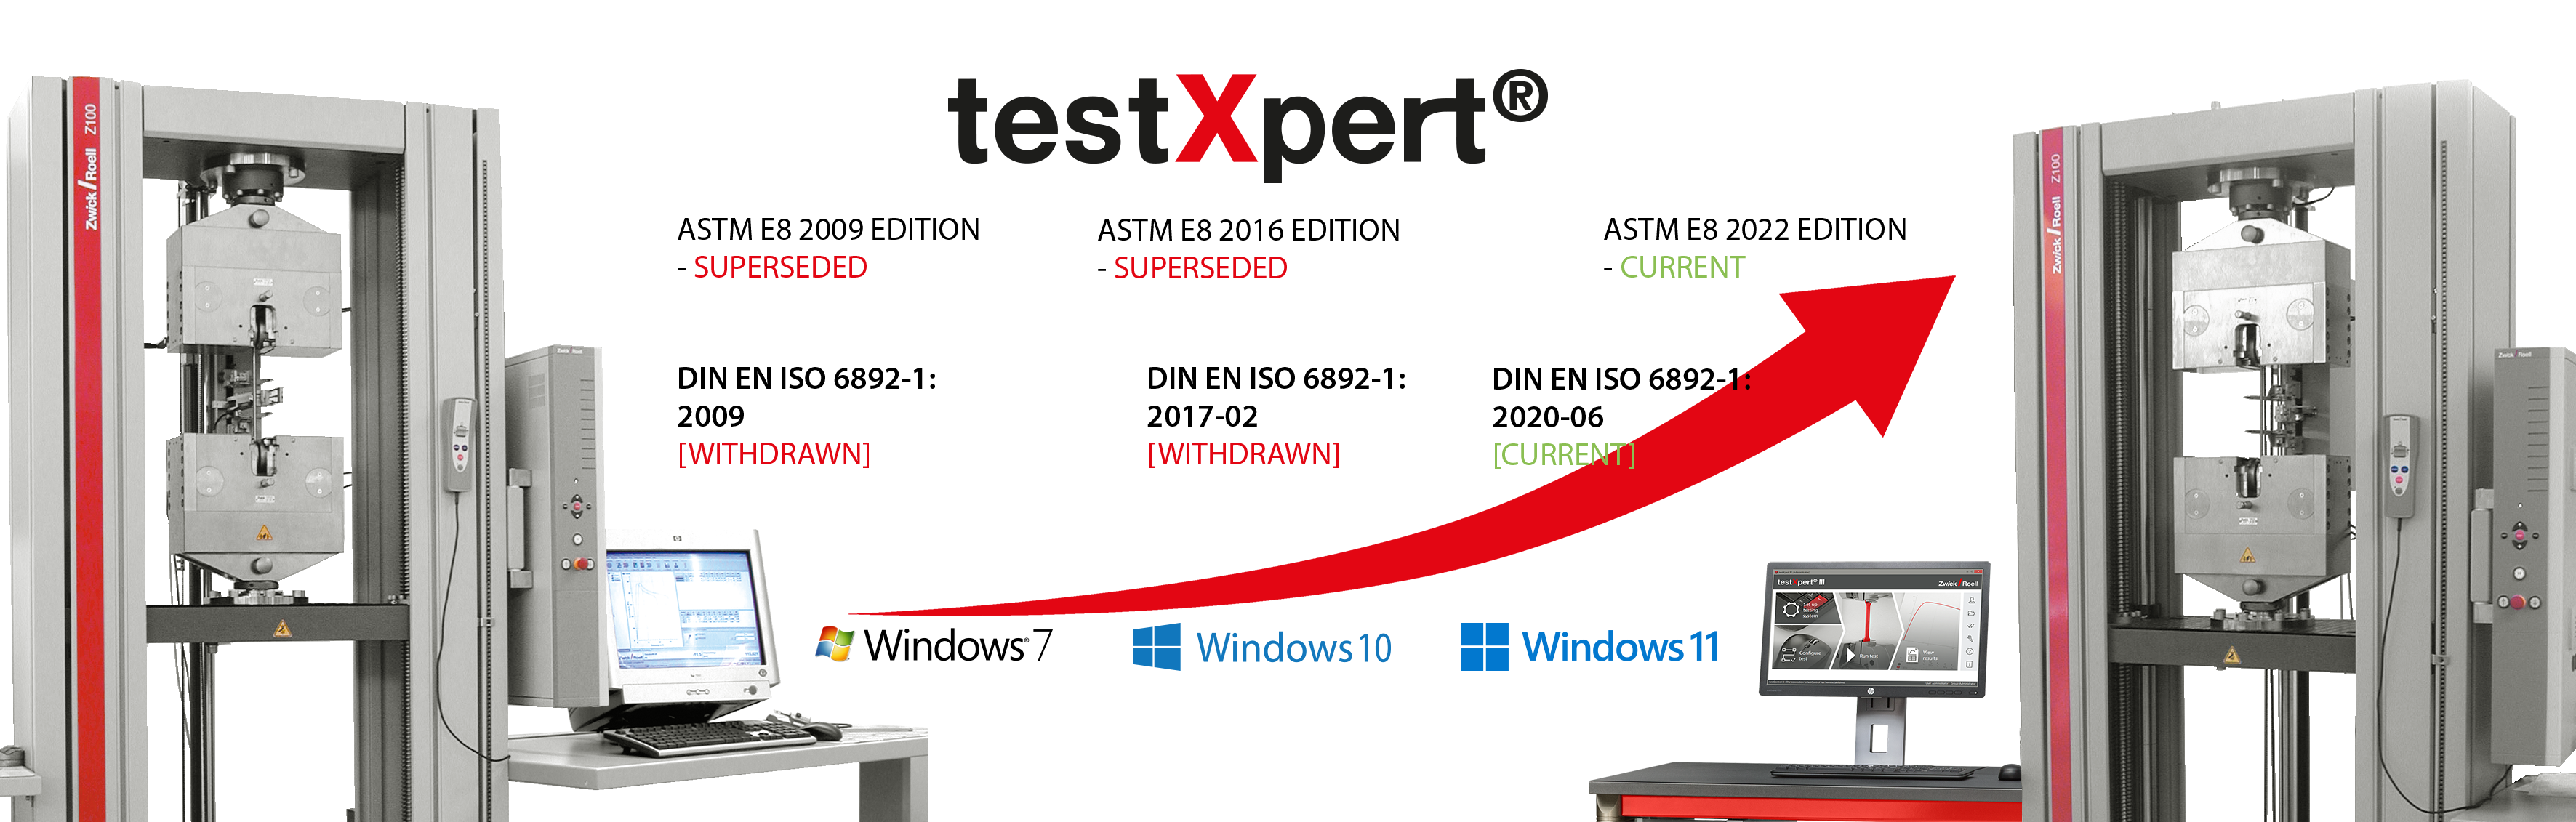 testXpert는 규격이 바뀌어도, 새로운 운영 체제가 도입되어도 사용자와 함께 성장합니다.